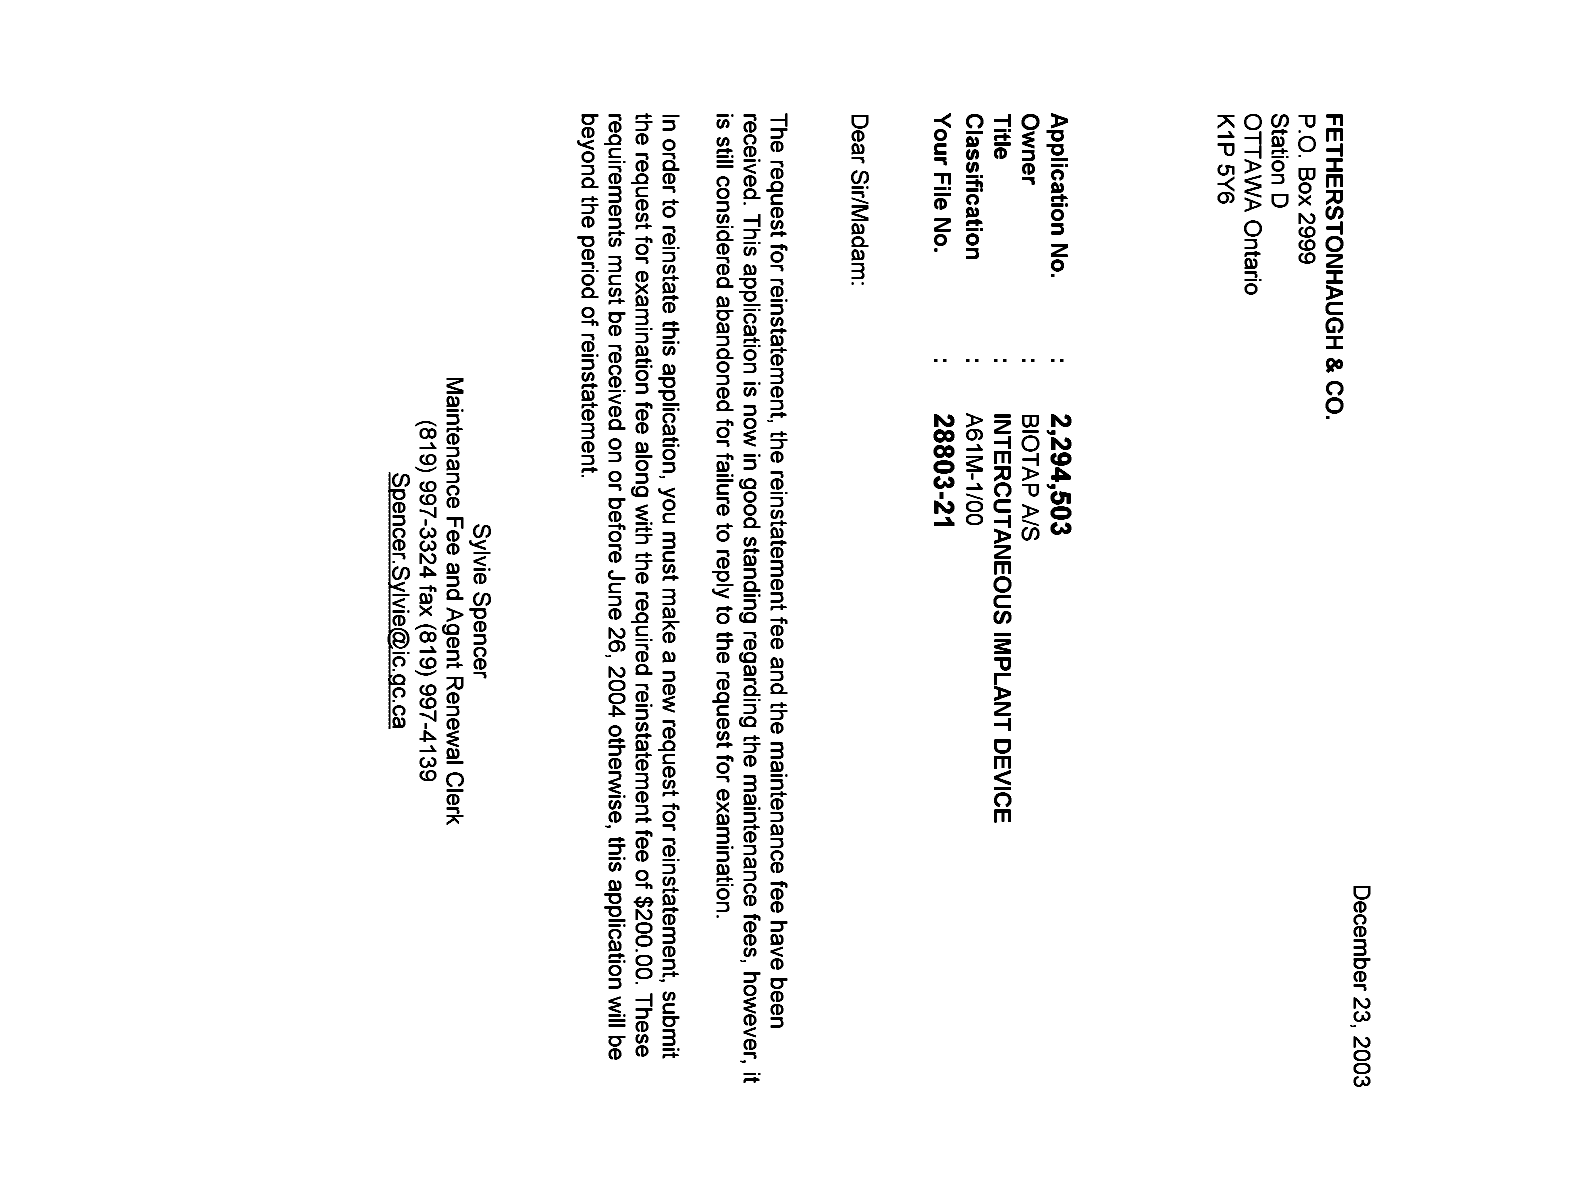 Canadian Patent Document 2294503. Correspondence 20021223. Image 1 of 1